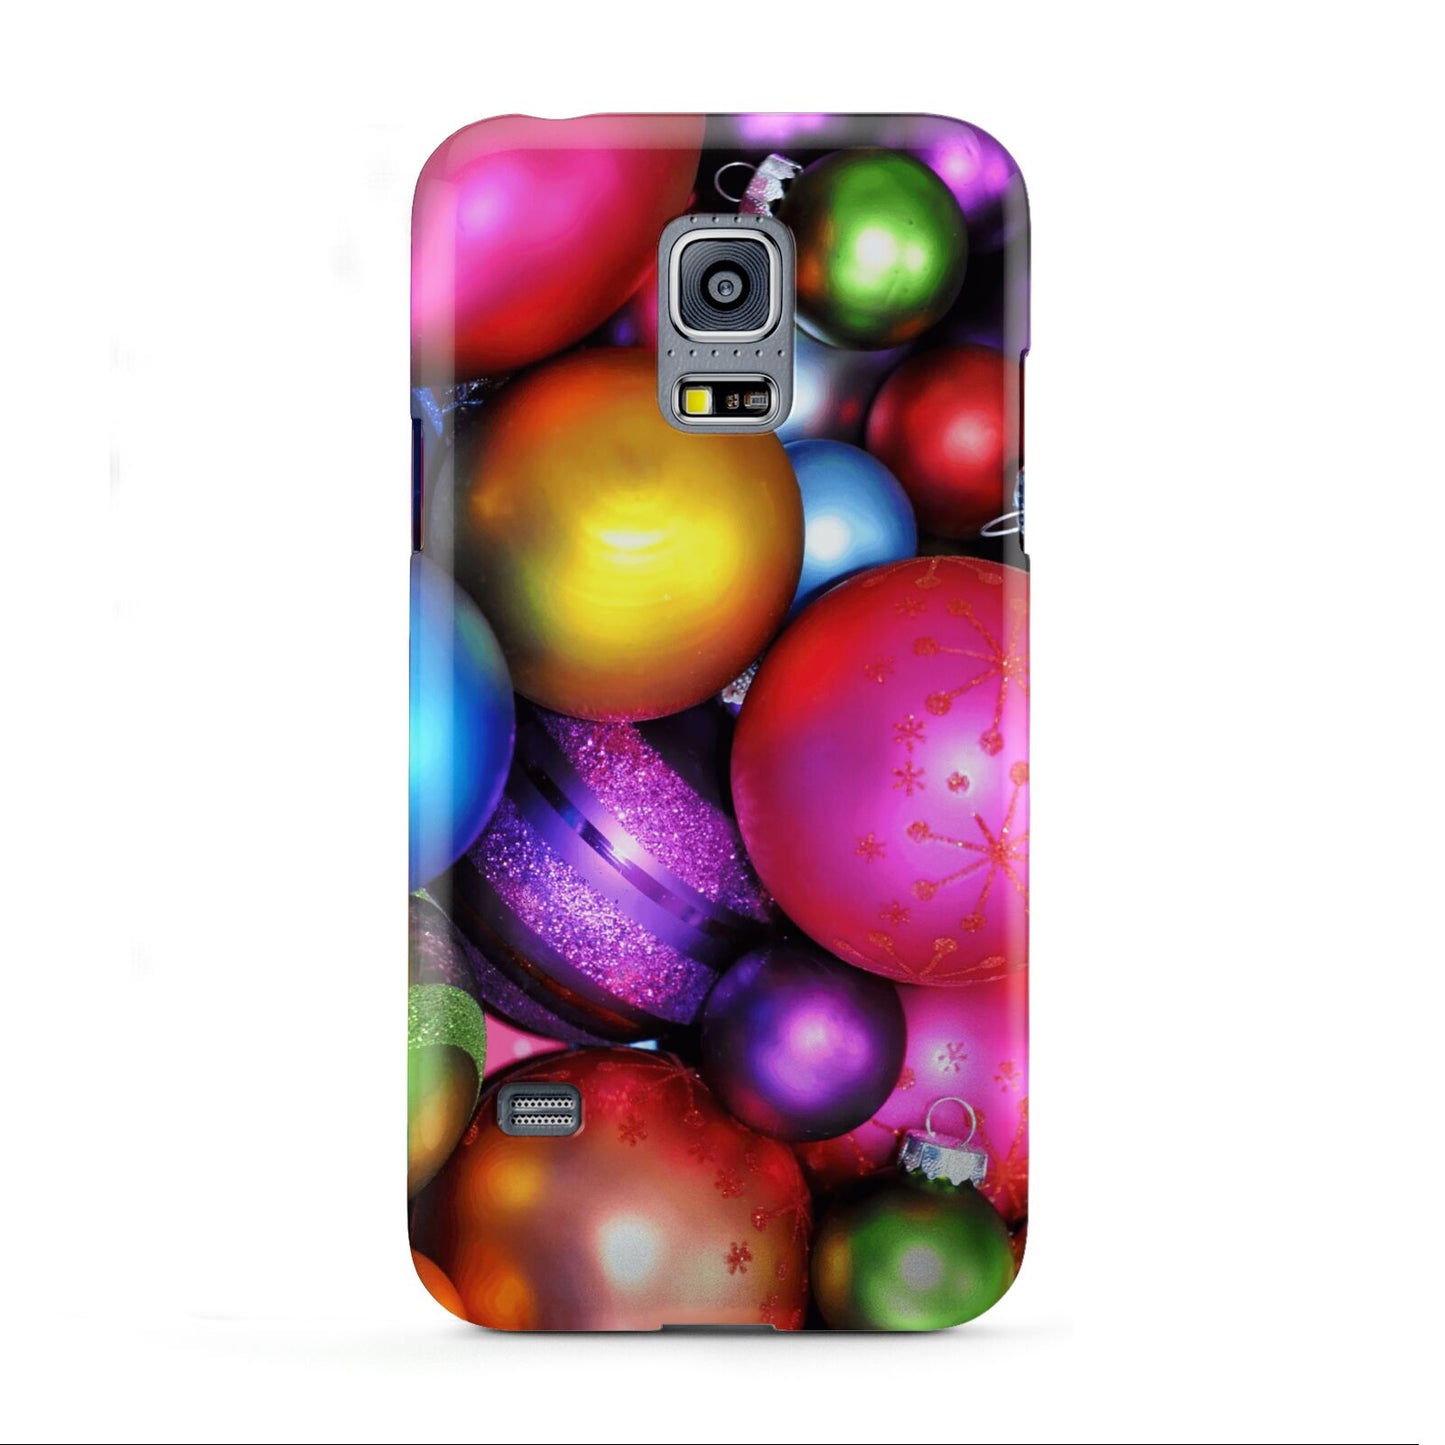 Bauble Samsung Galaxy S5 Mini Case